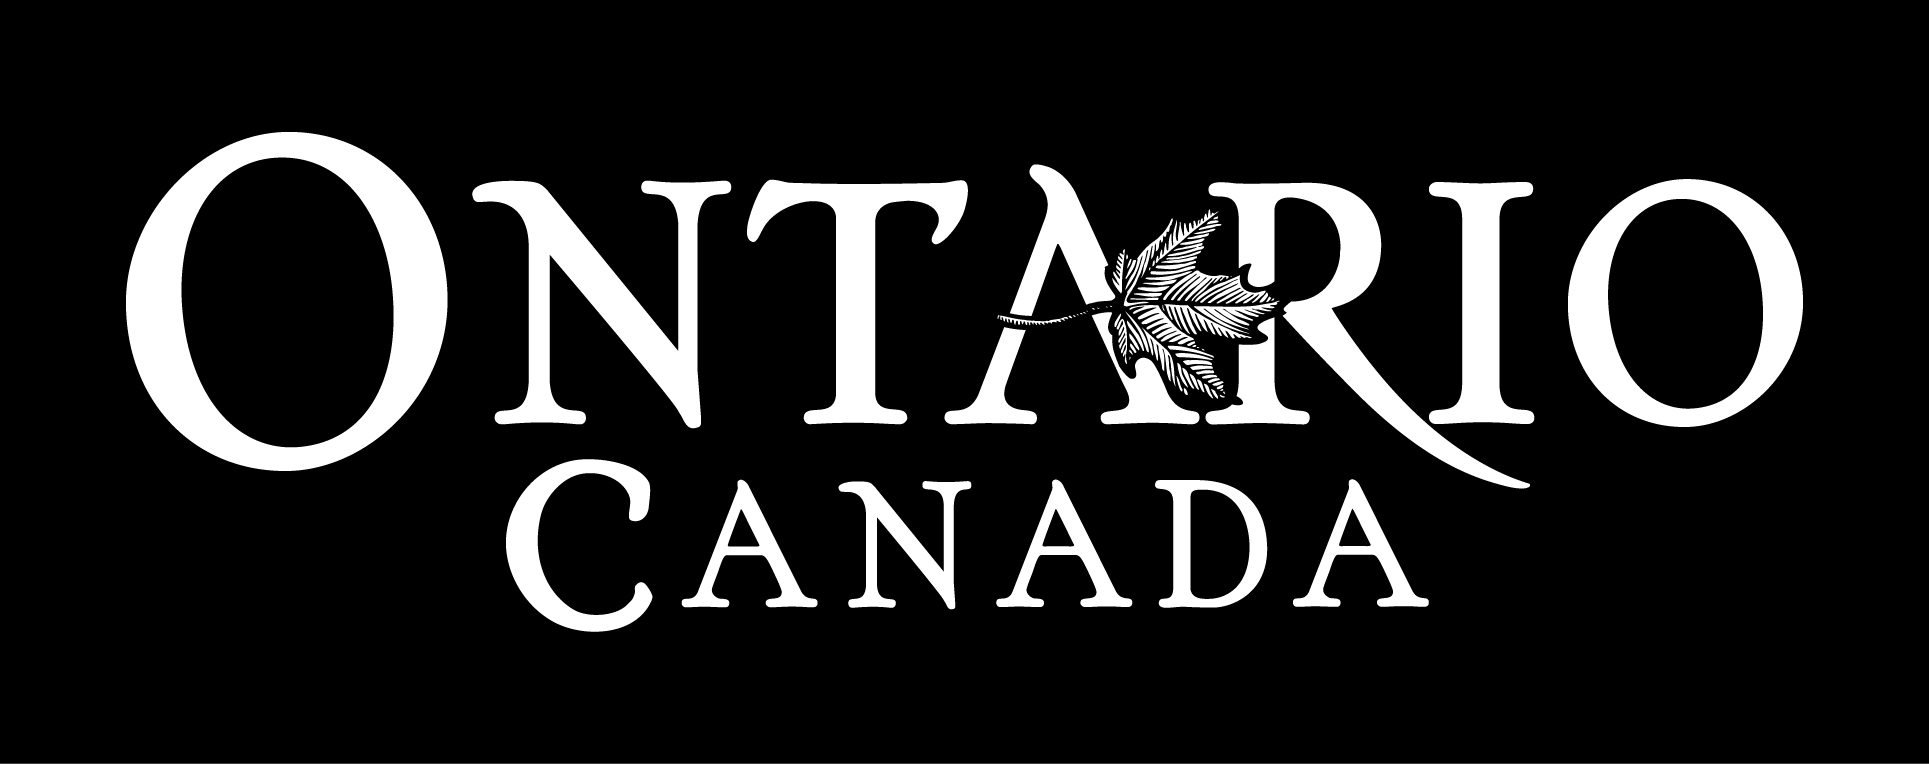 Logos de l'Ontario, Canada - Blanc inversé